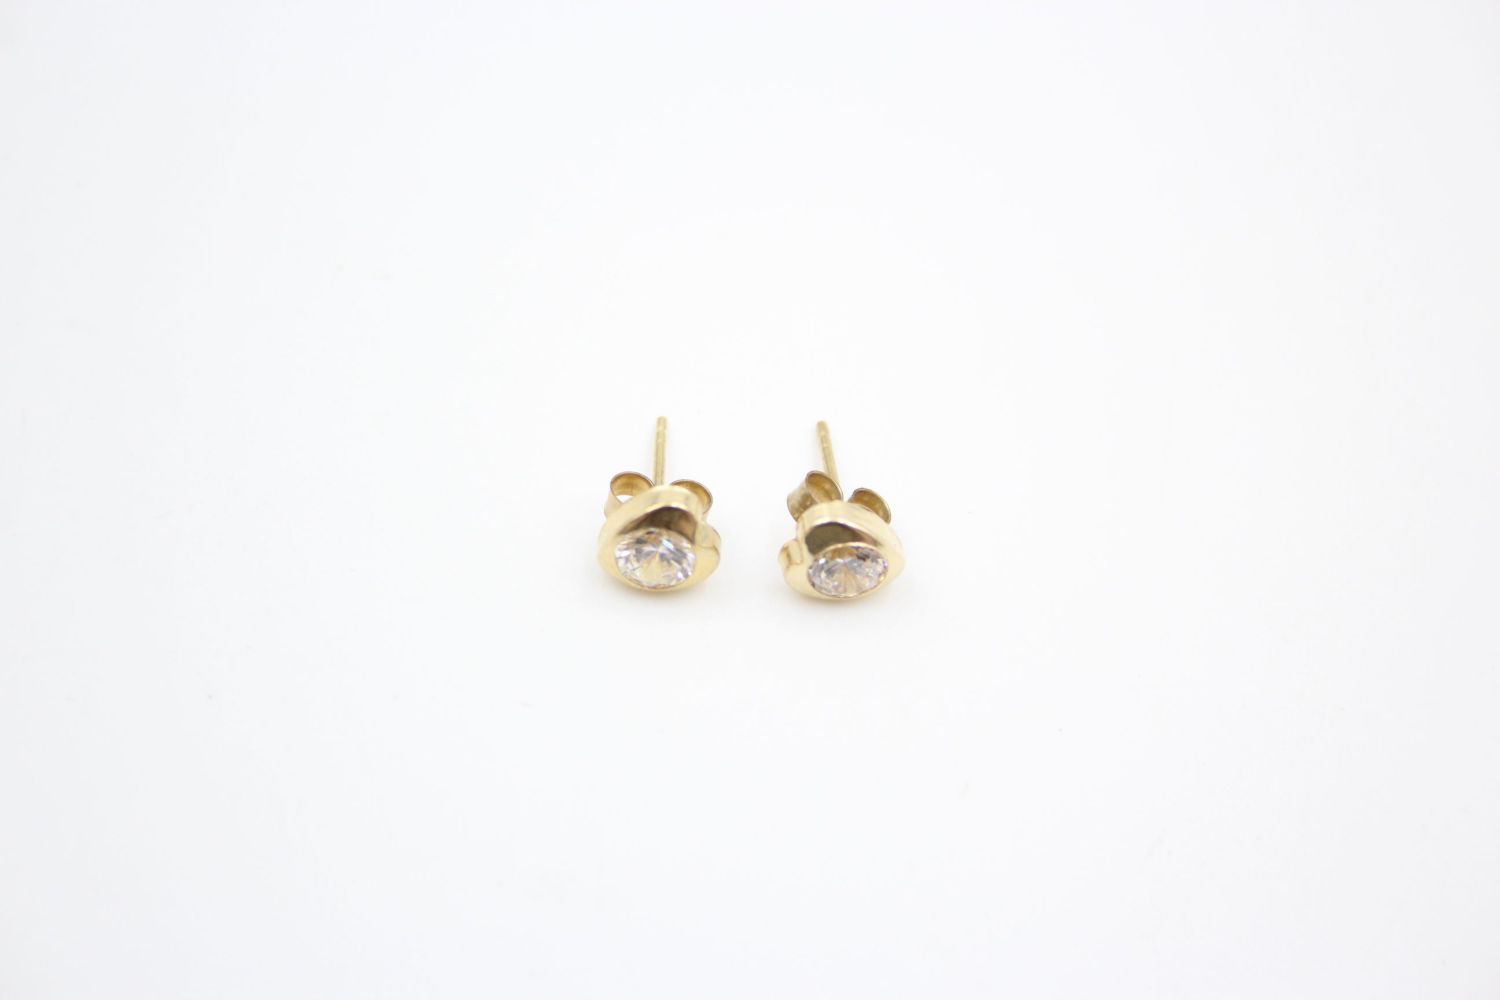 2 x 9ct gold gemstone stud earrings 1.6 grams gross - Image 7 of 10